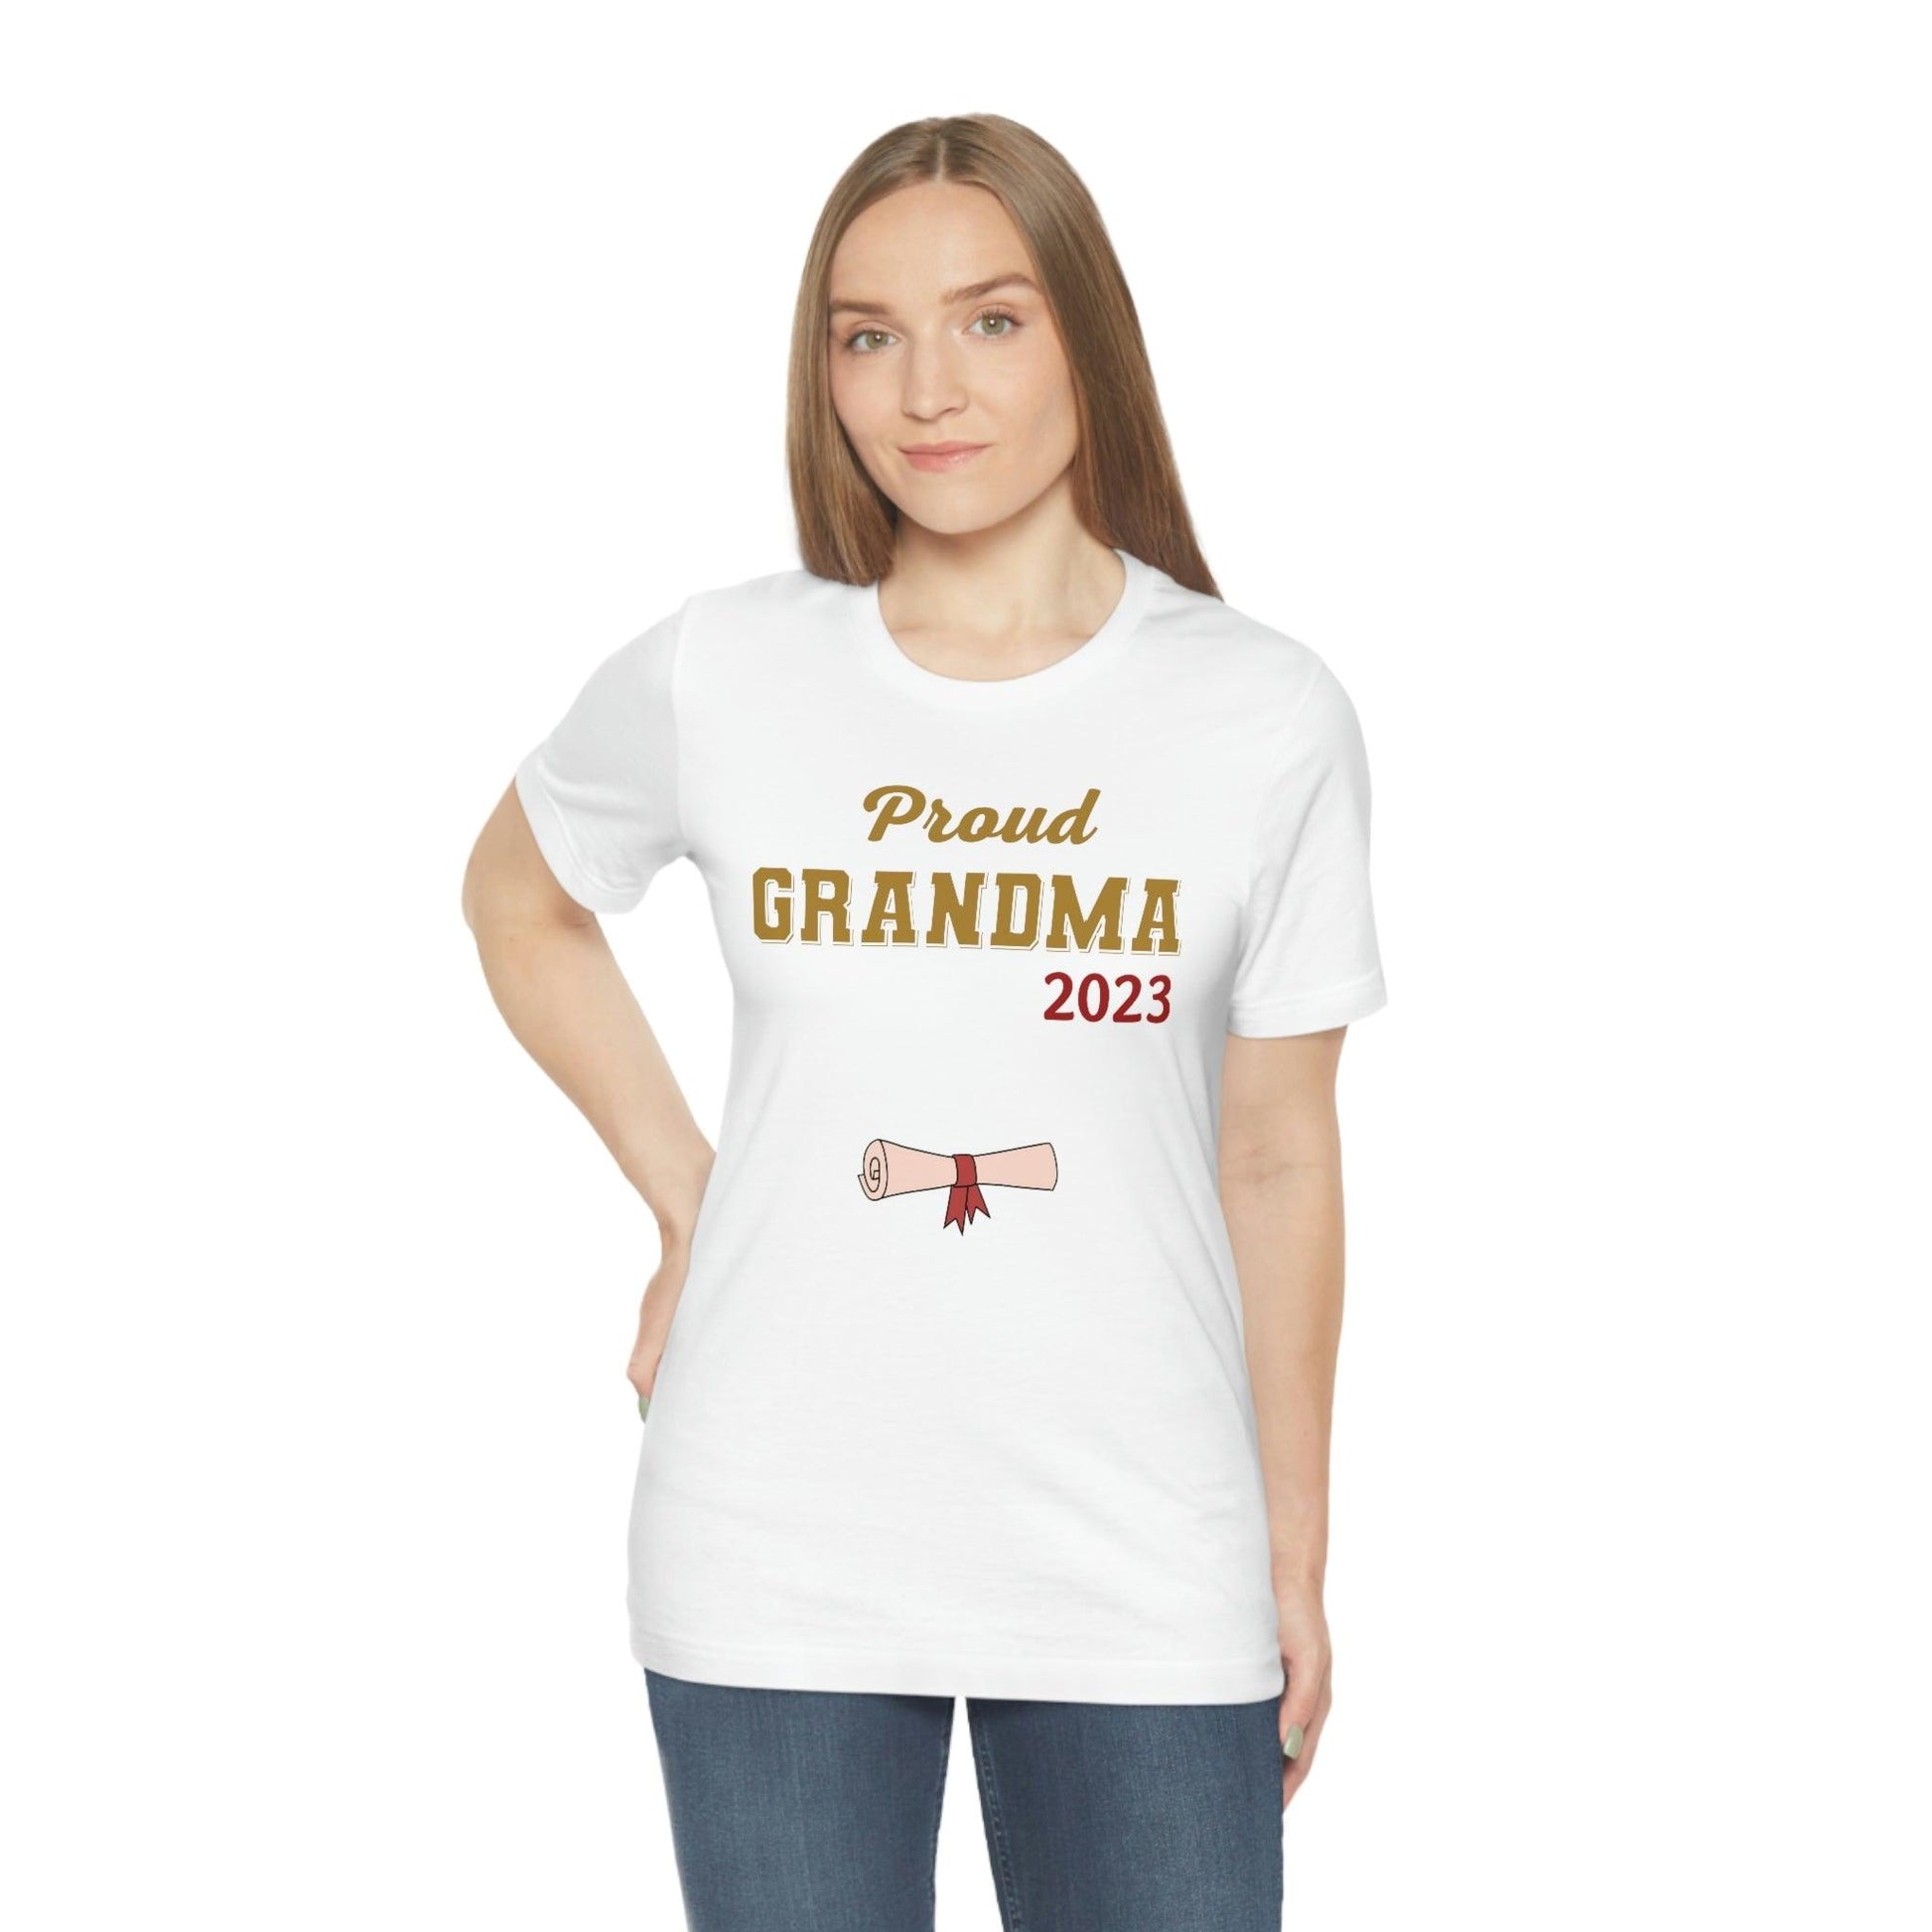 Proud Grandma of a Graduate shirt - Graduation shirt - Graduation gift - Giftsmojo